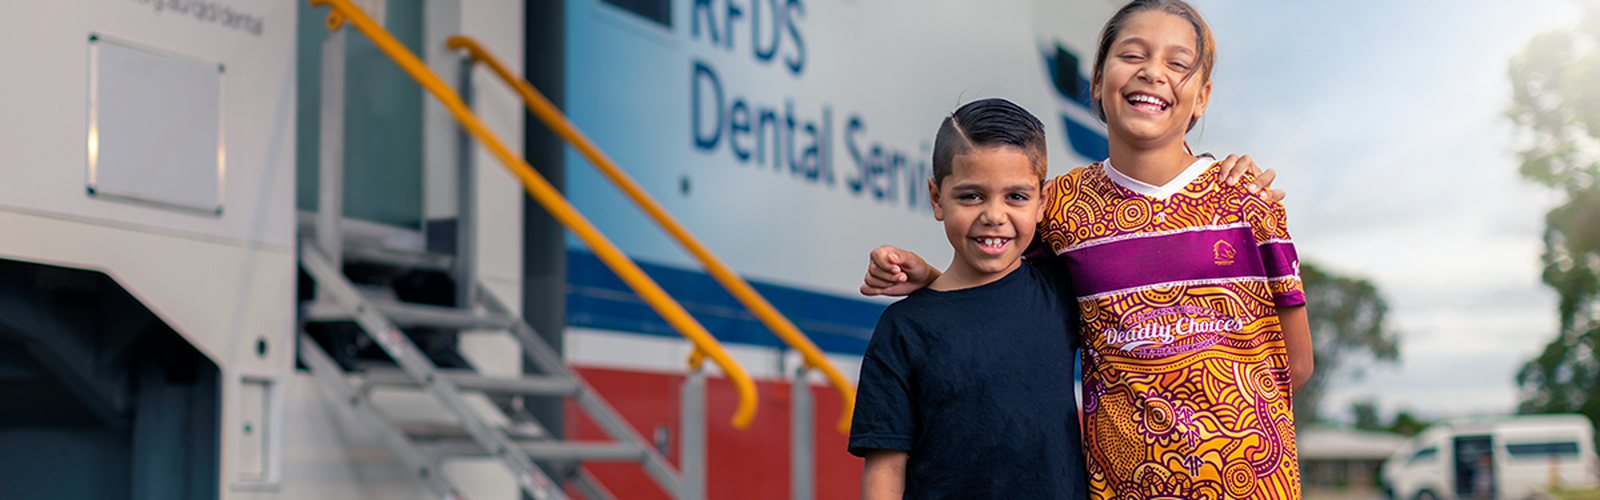 RFDS Dental Service 